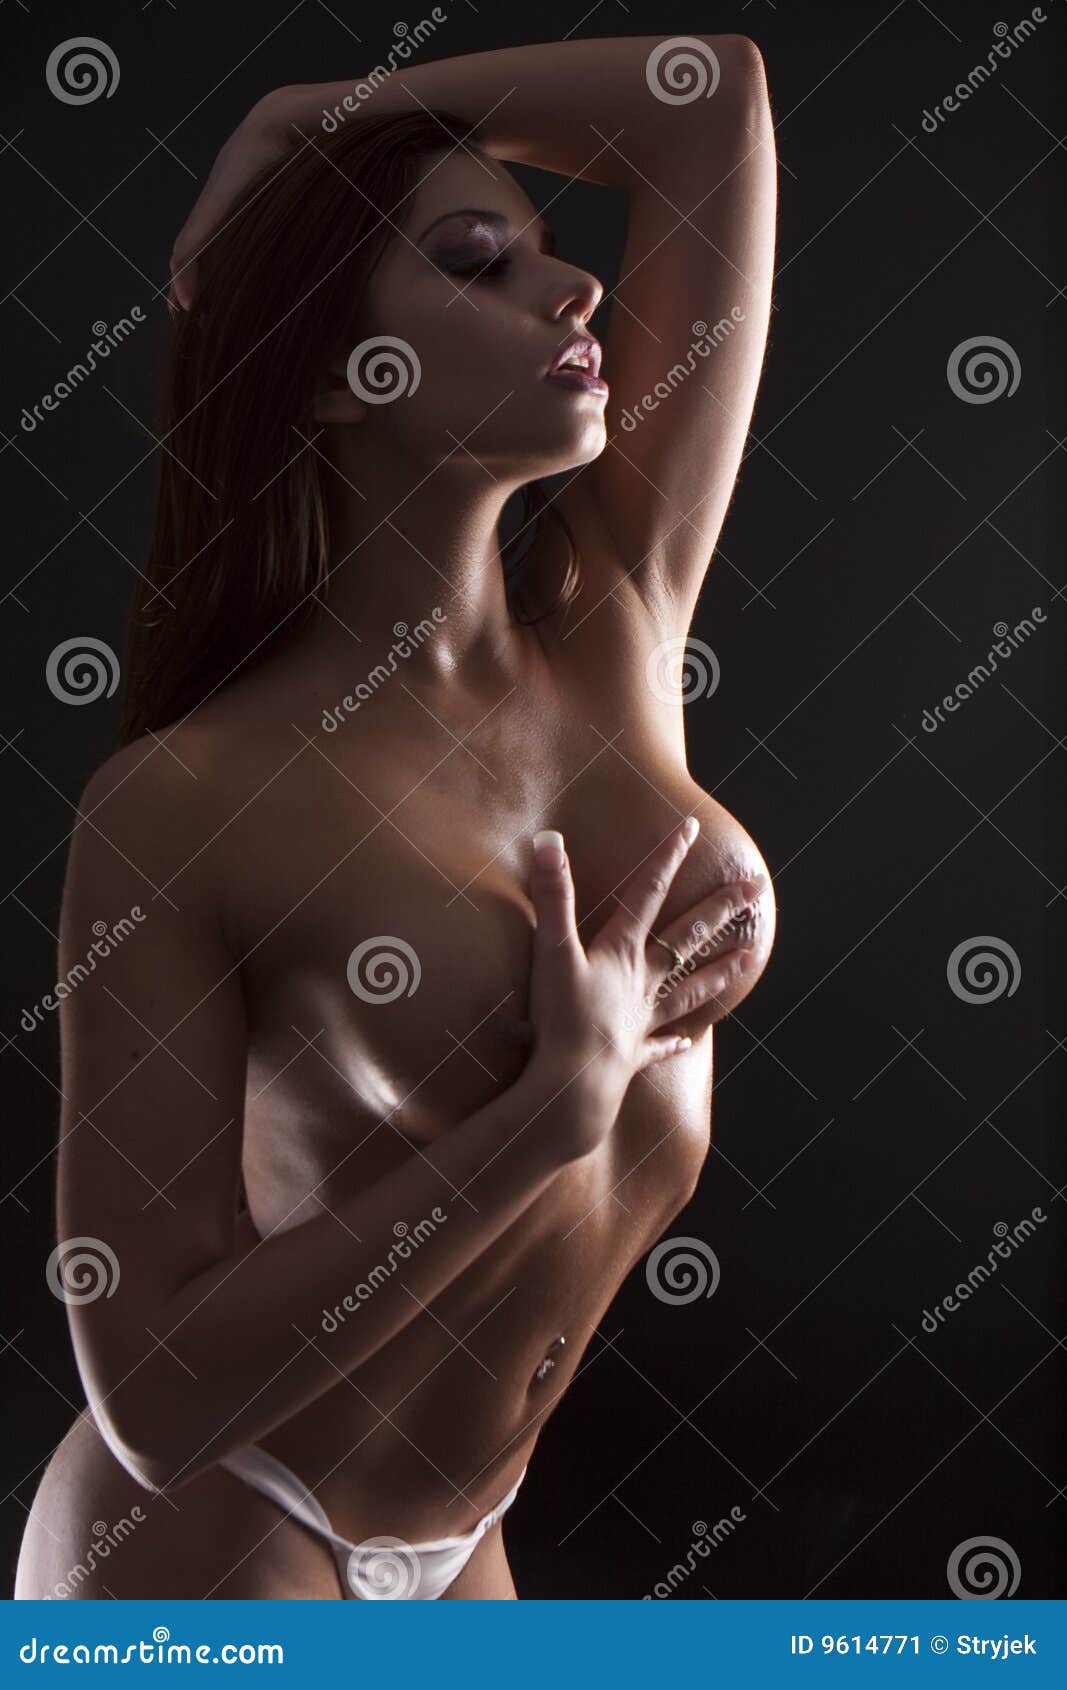 Sexy Big Tit Women 64